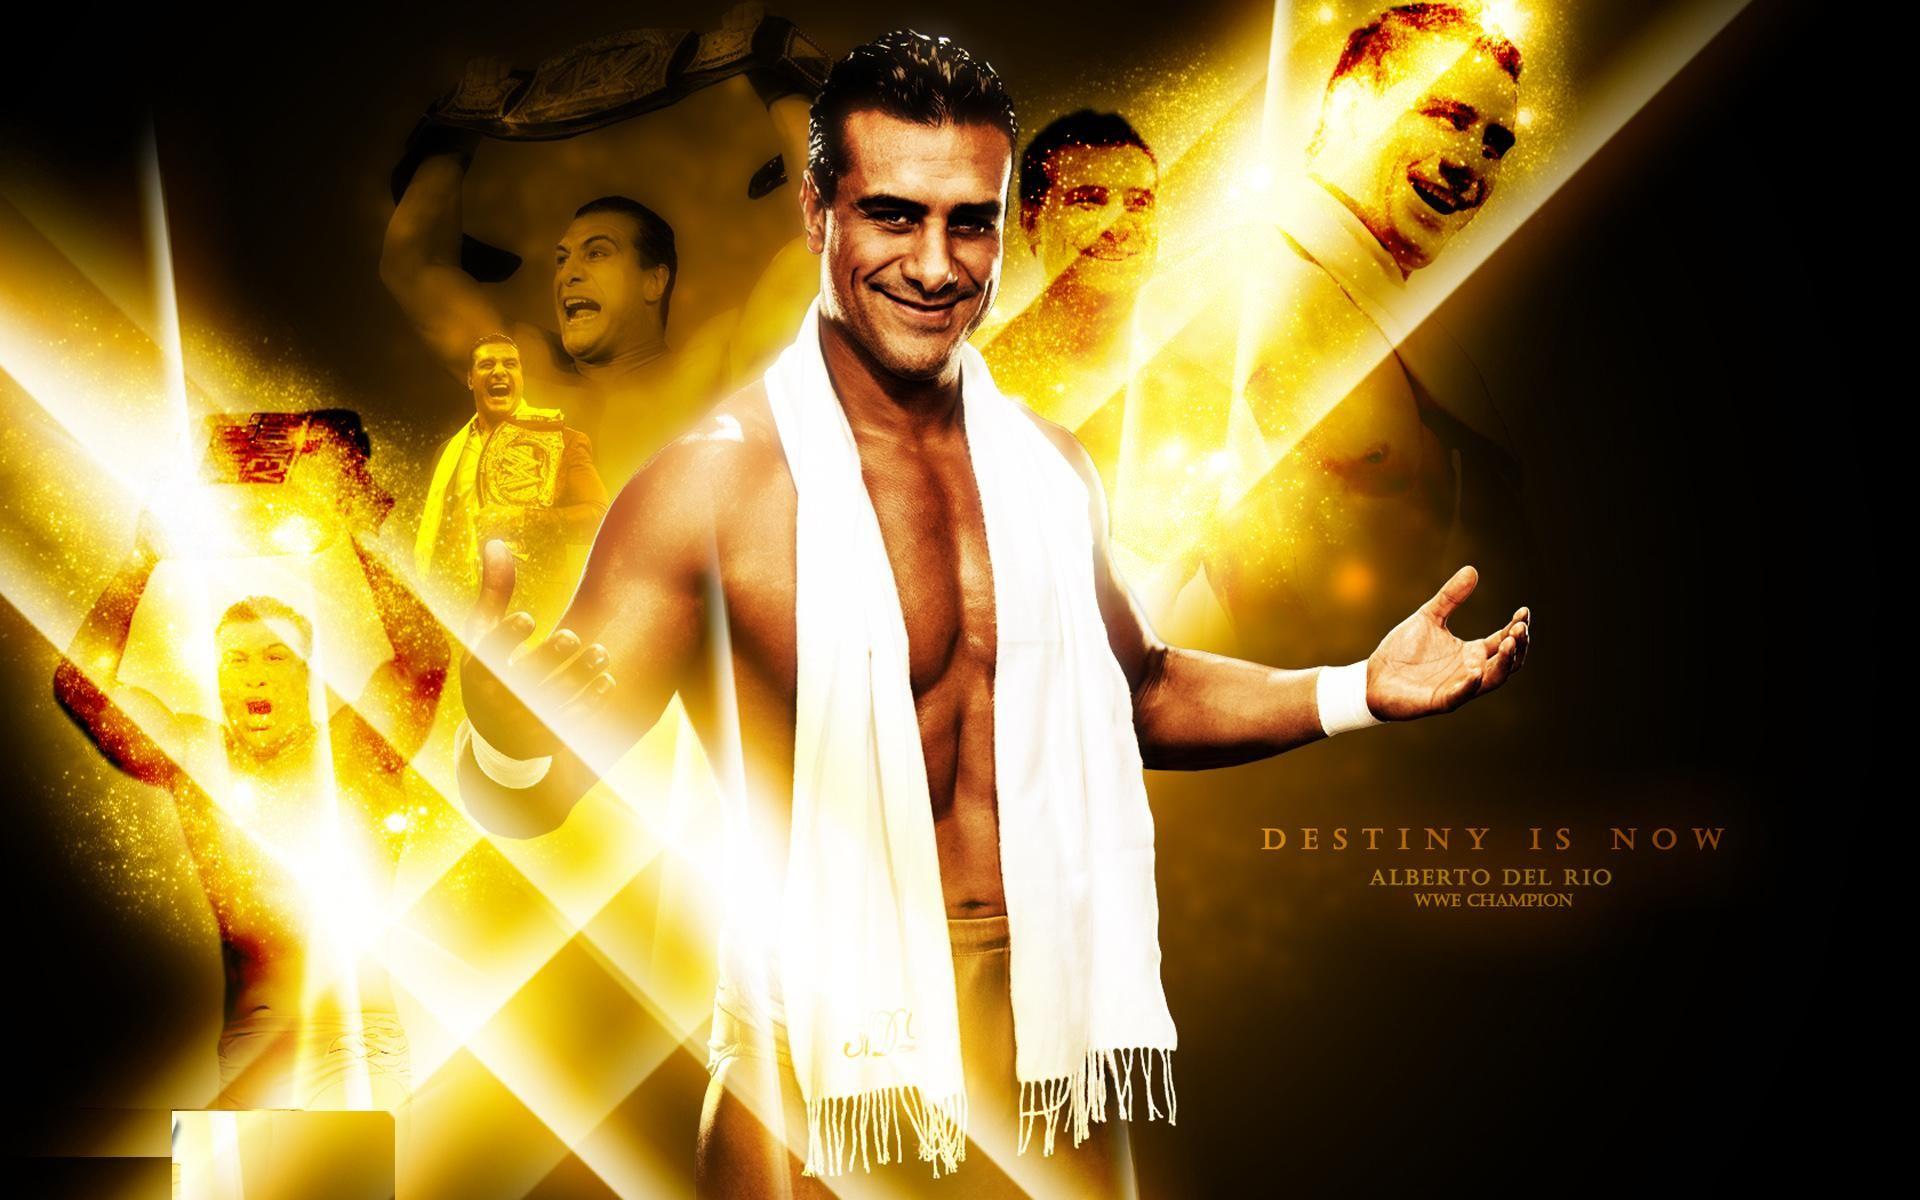 Wallpaper of Alberto Del Rio Superstars, WWE Wallpaper, WWE